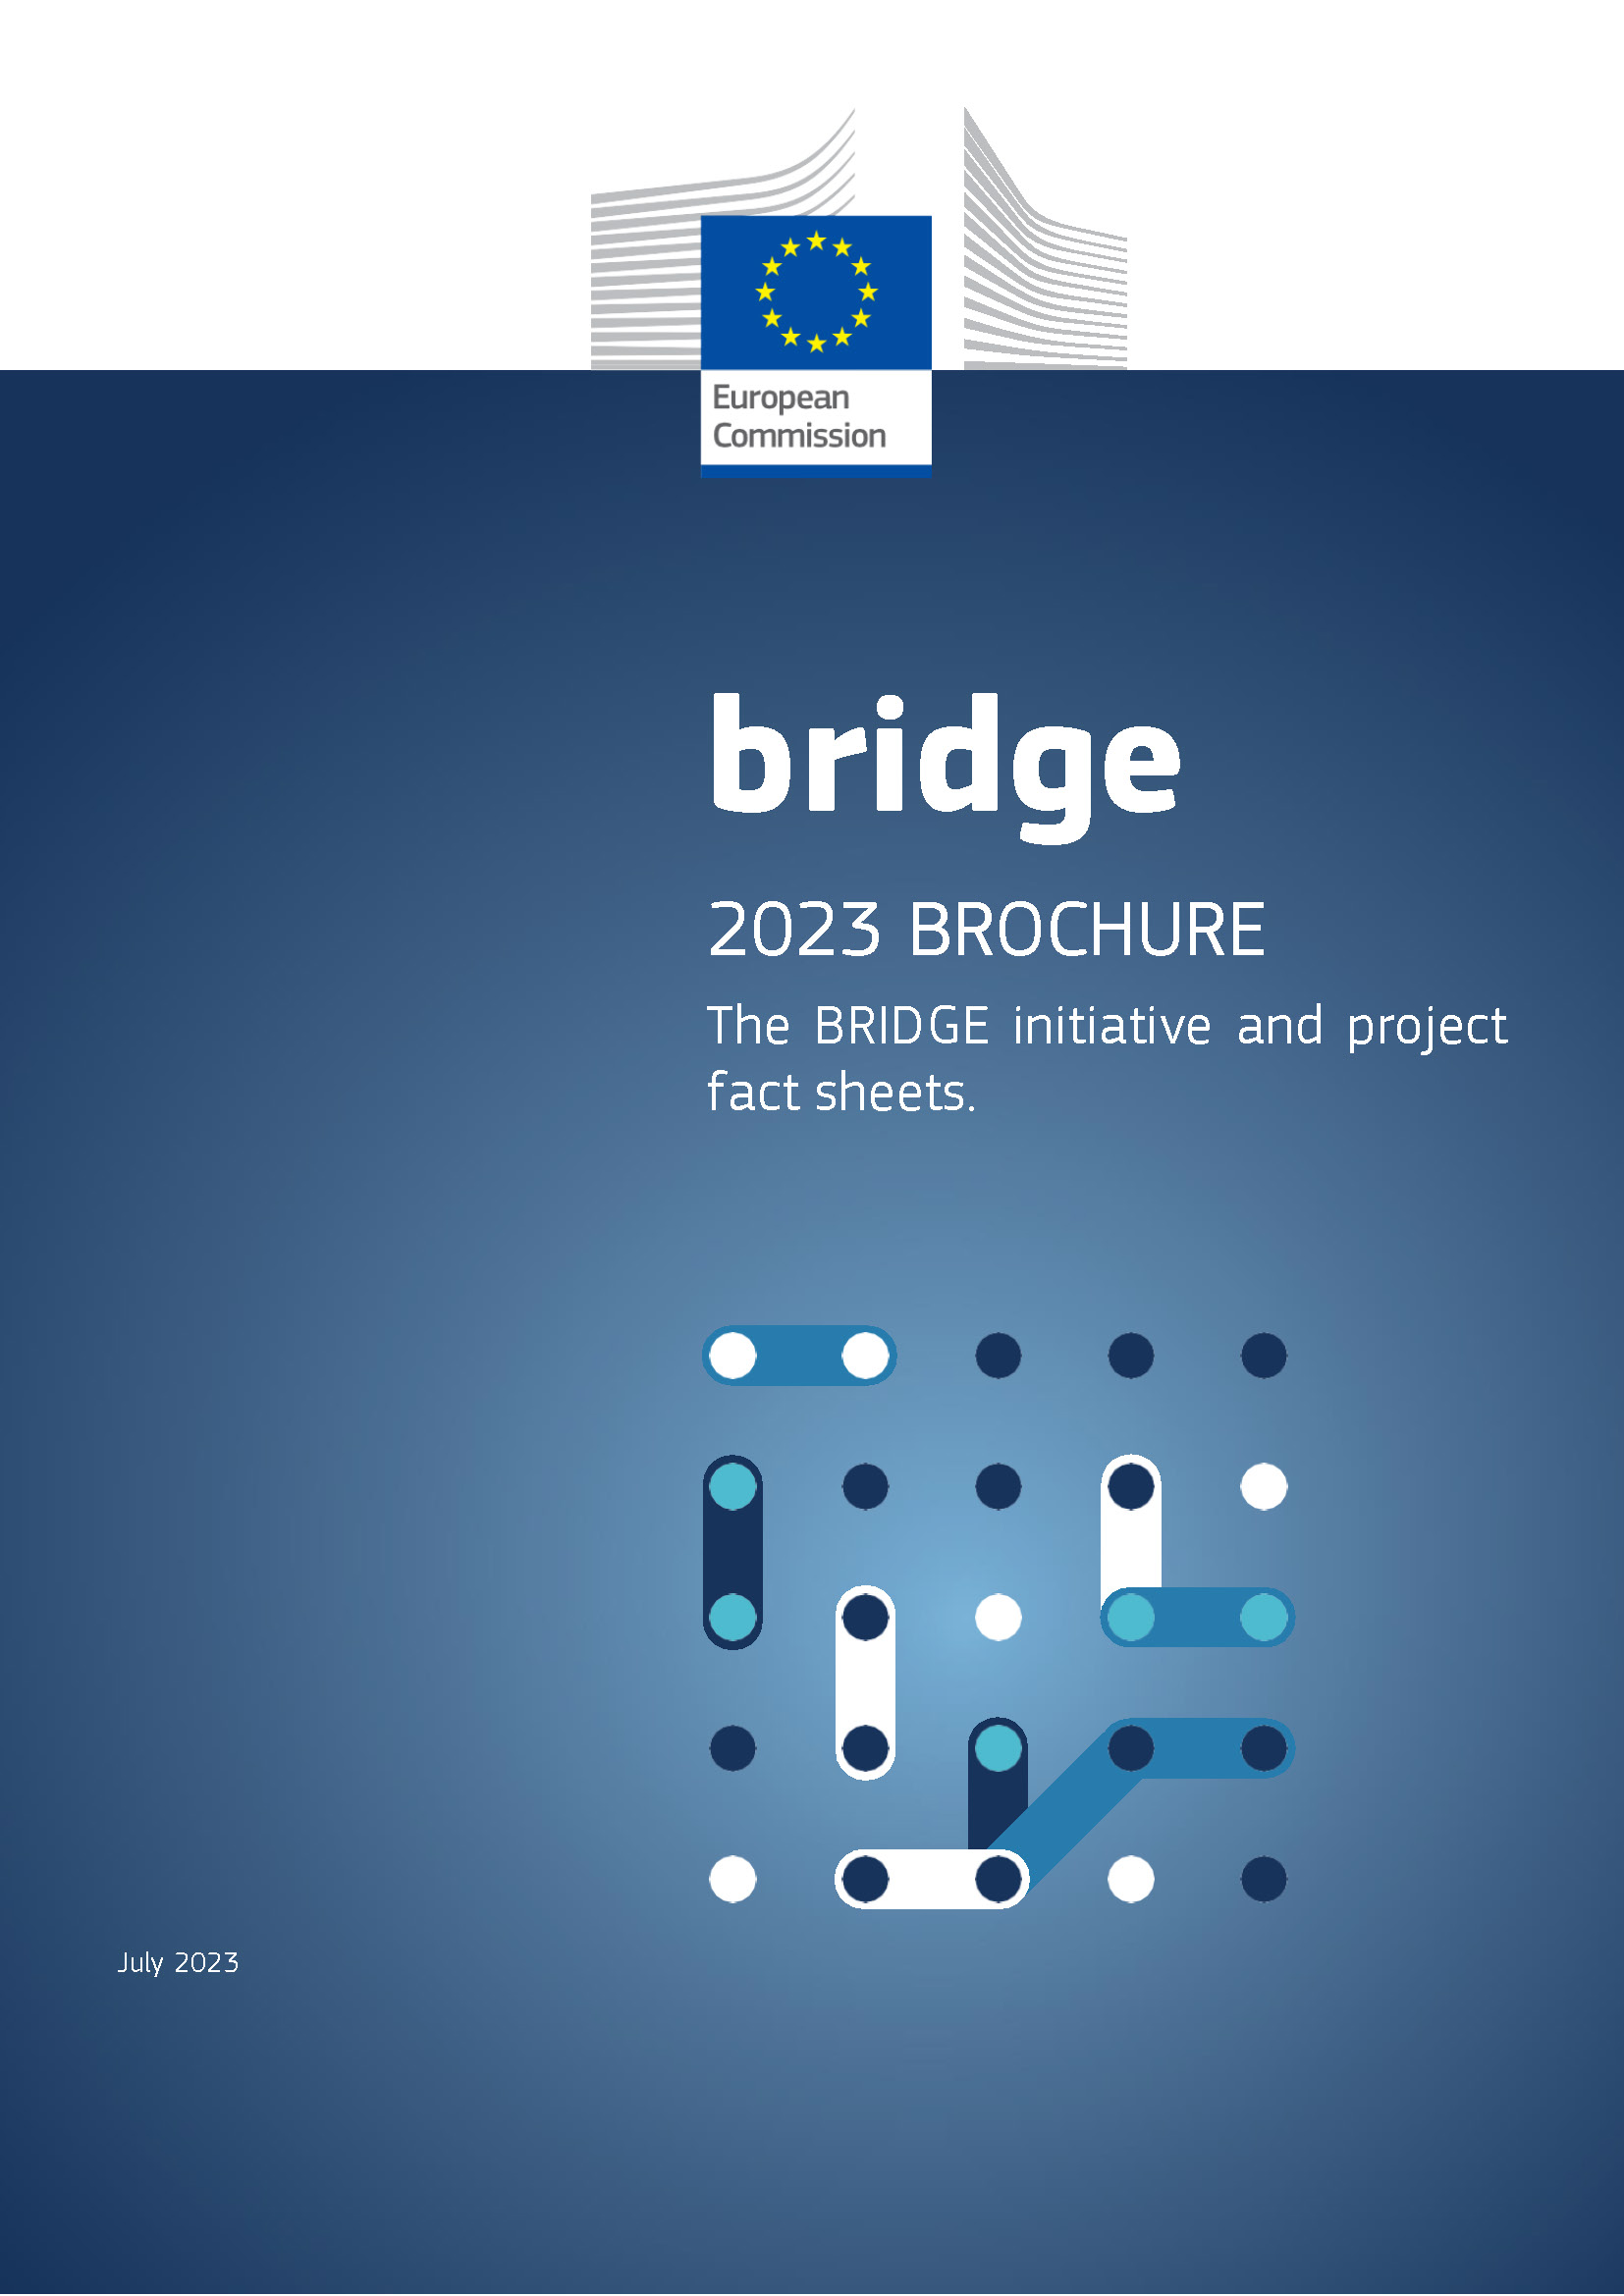 BRIDGE brochue 2023